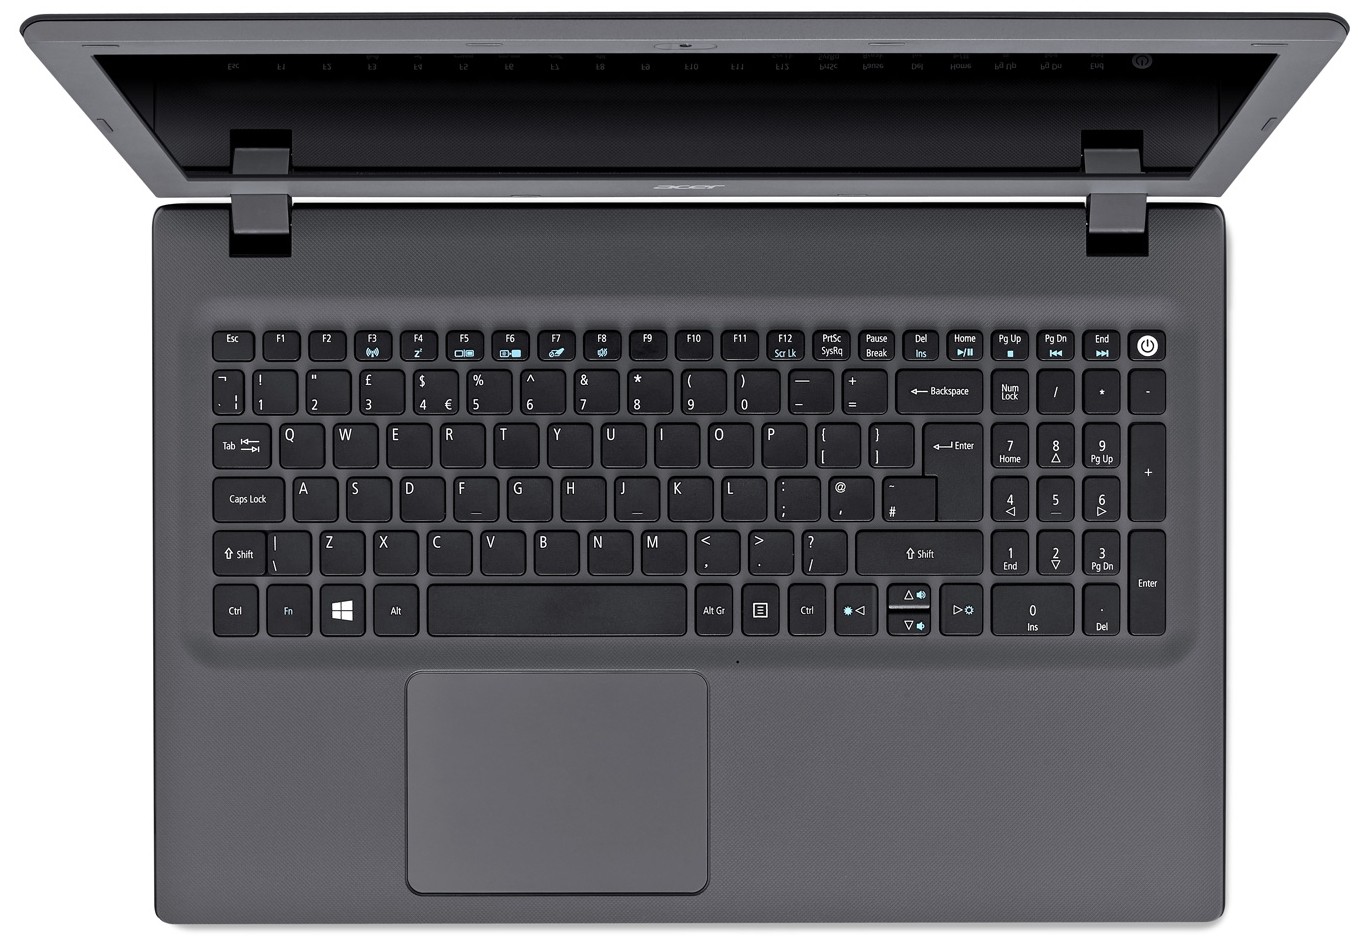 Ноутбук Acer Aspire E5 573g Цена